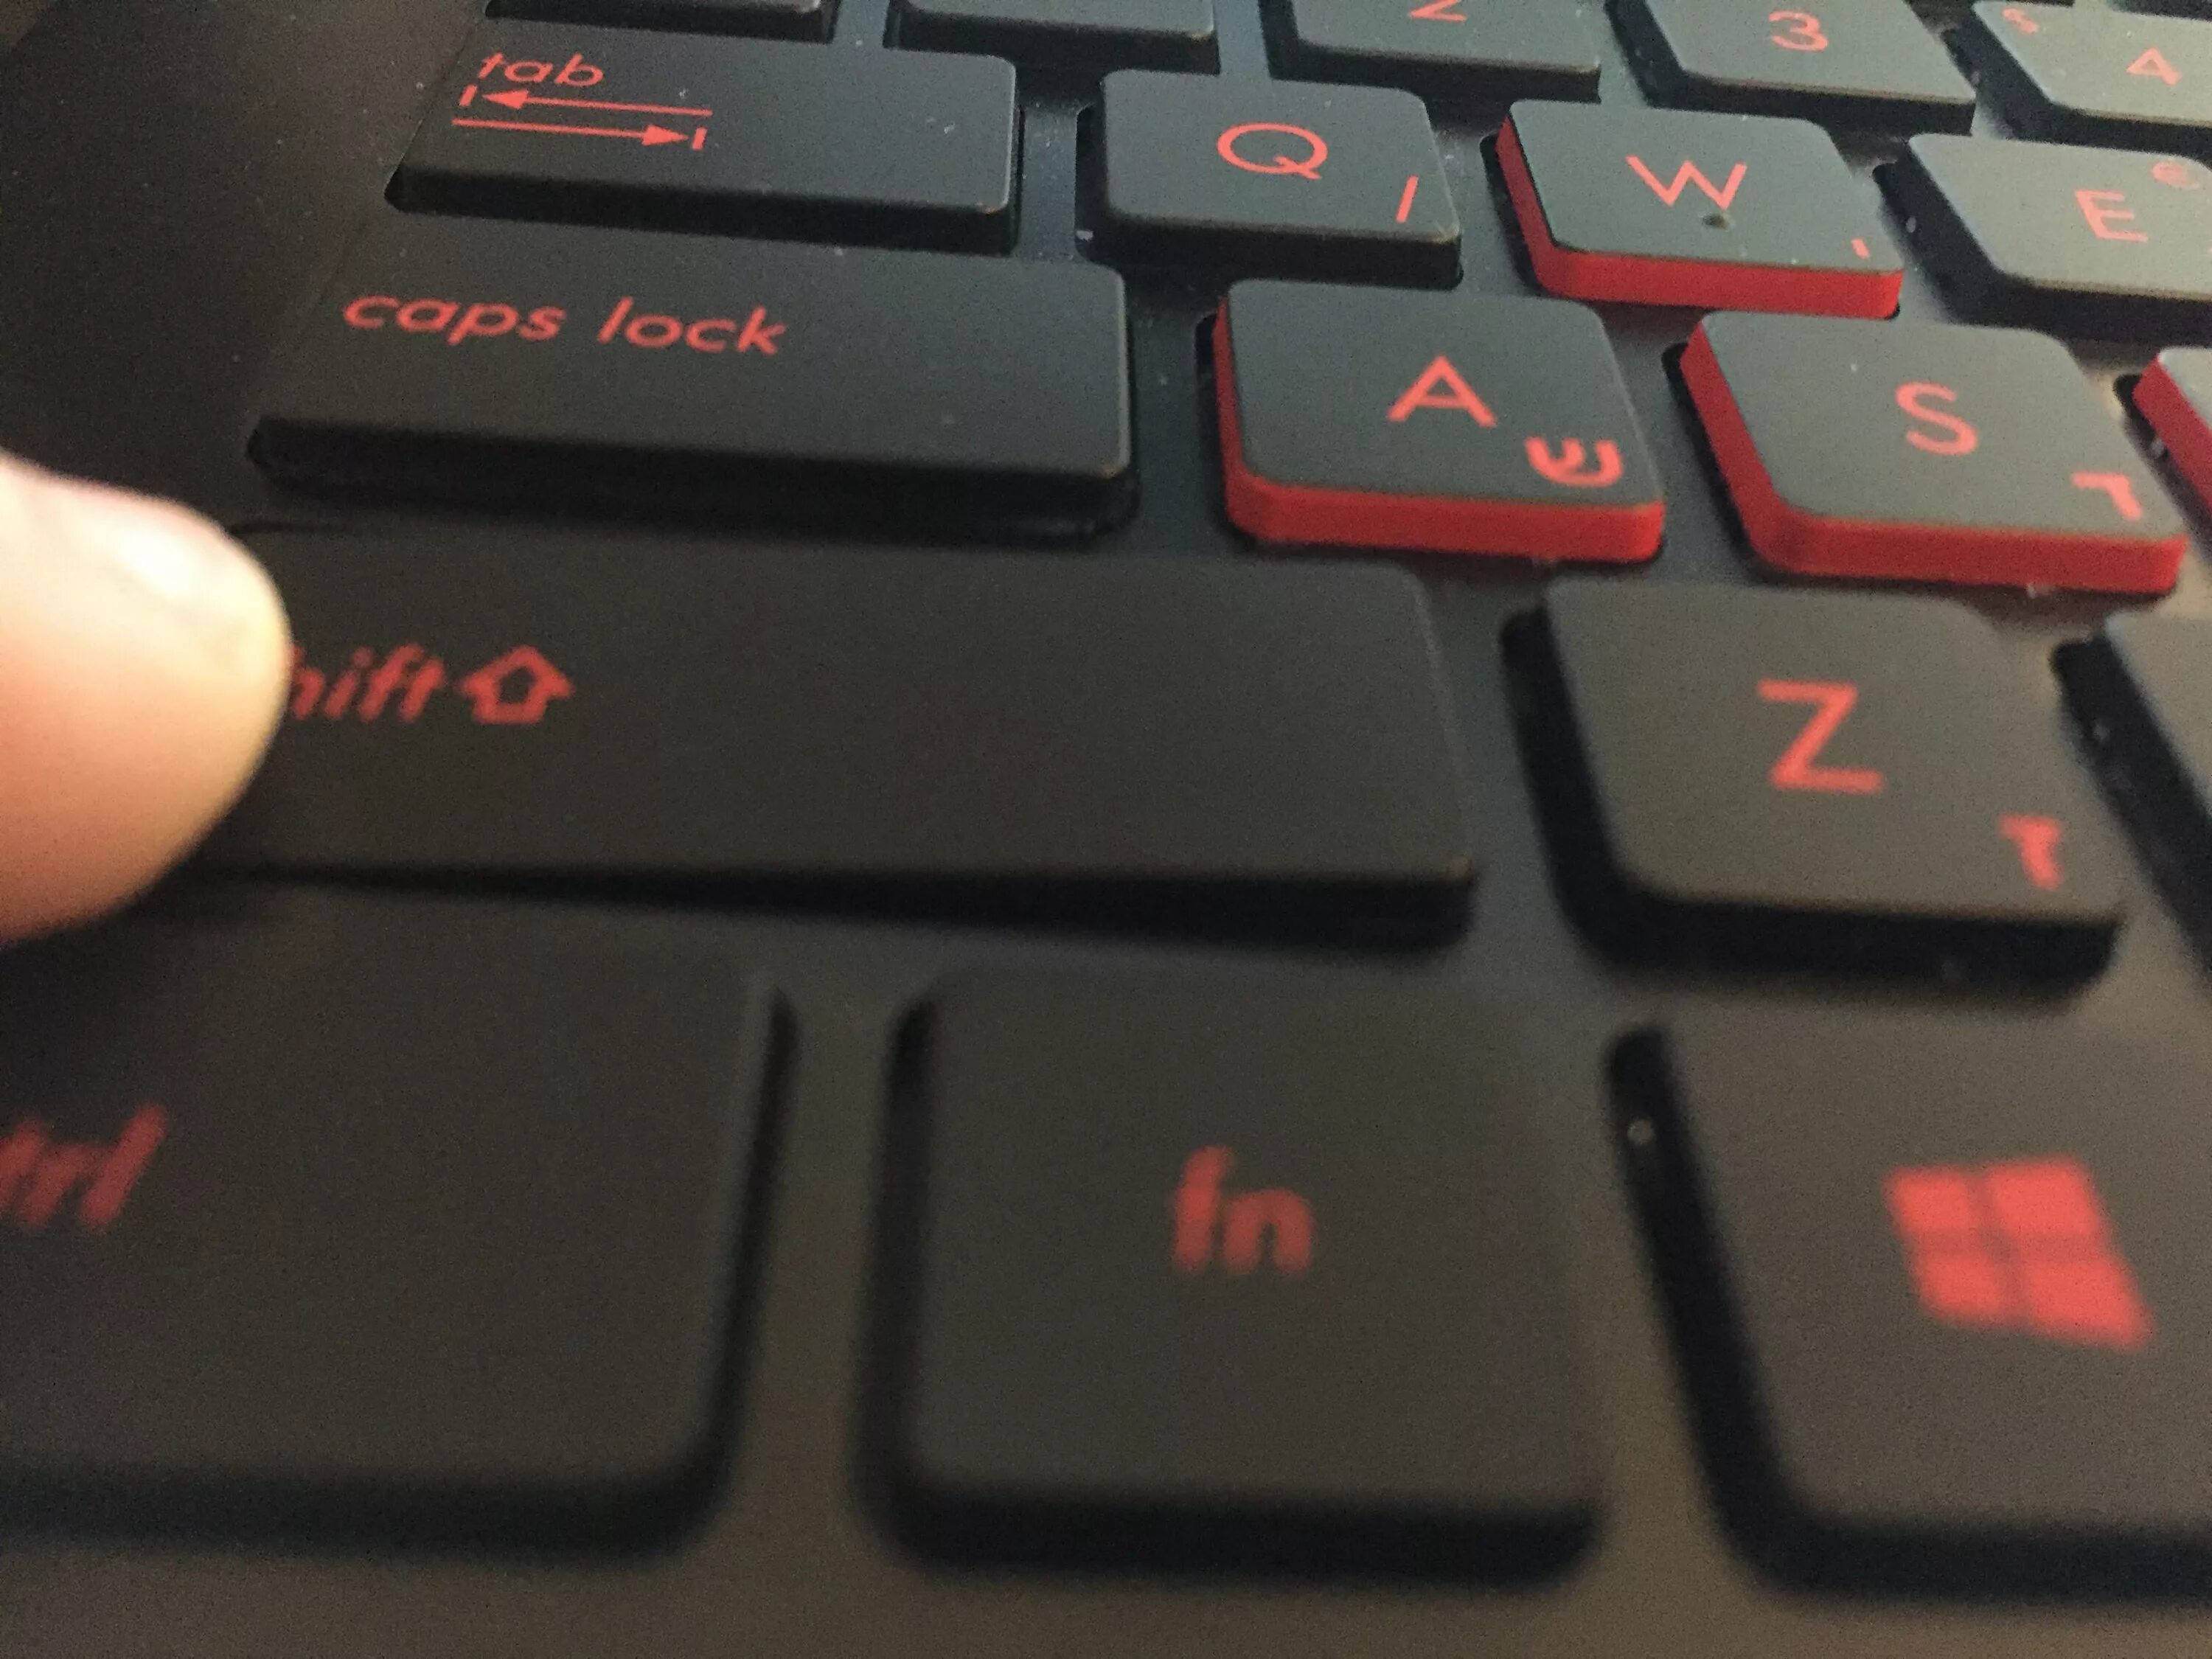 Где шифт на компьютере. Кнопка шифт на клаве. Кнопка лефт шифт на клавиатуре. Клавиша Shift на клавиатуре. Клавиша left Shift на клавиатуре.